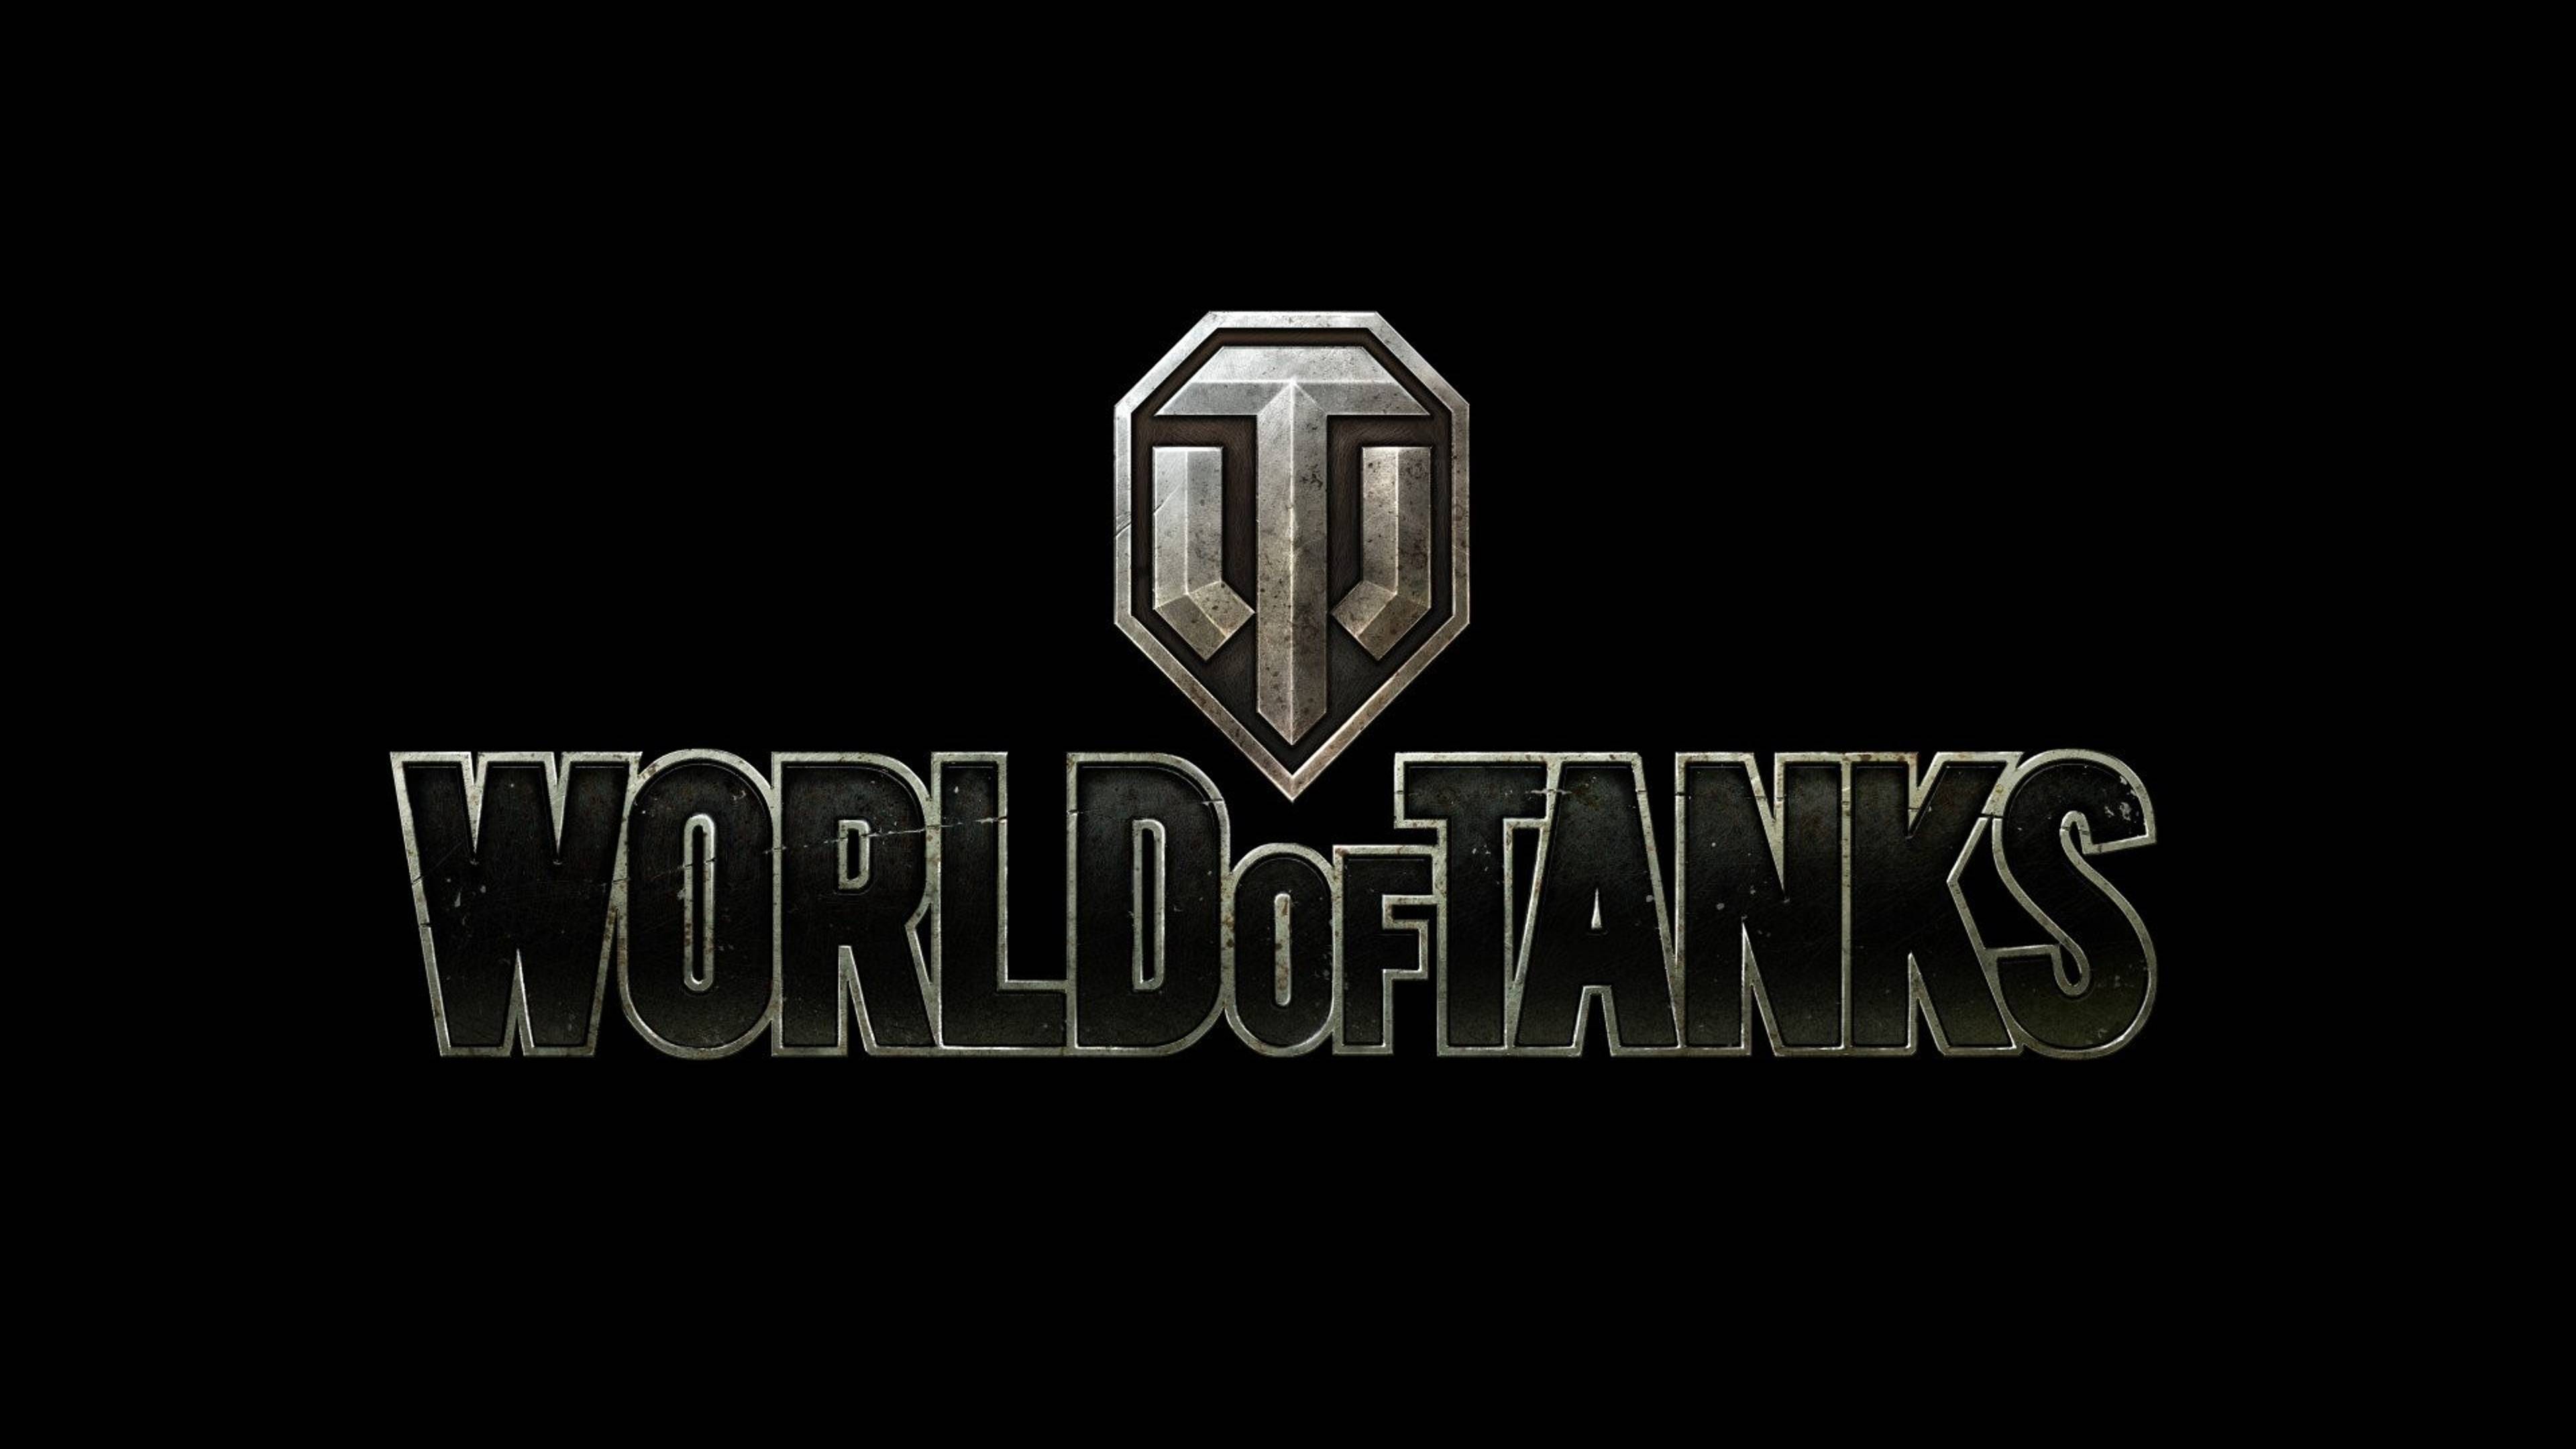 Всем привет я играю в World of tanks  (Ворлд оф танкс).